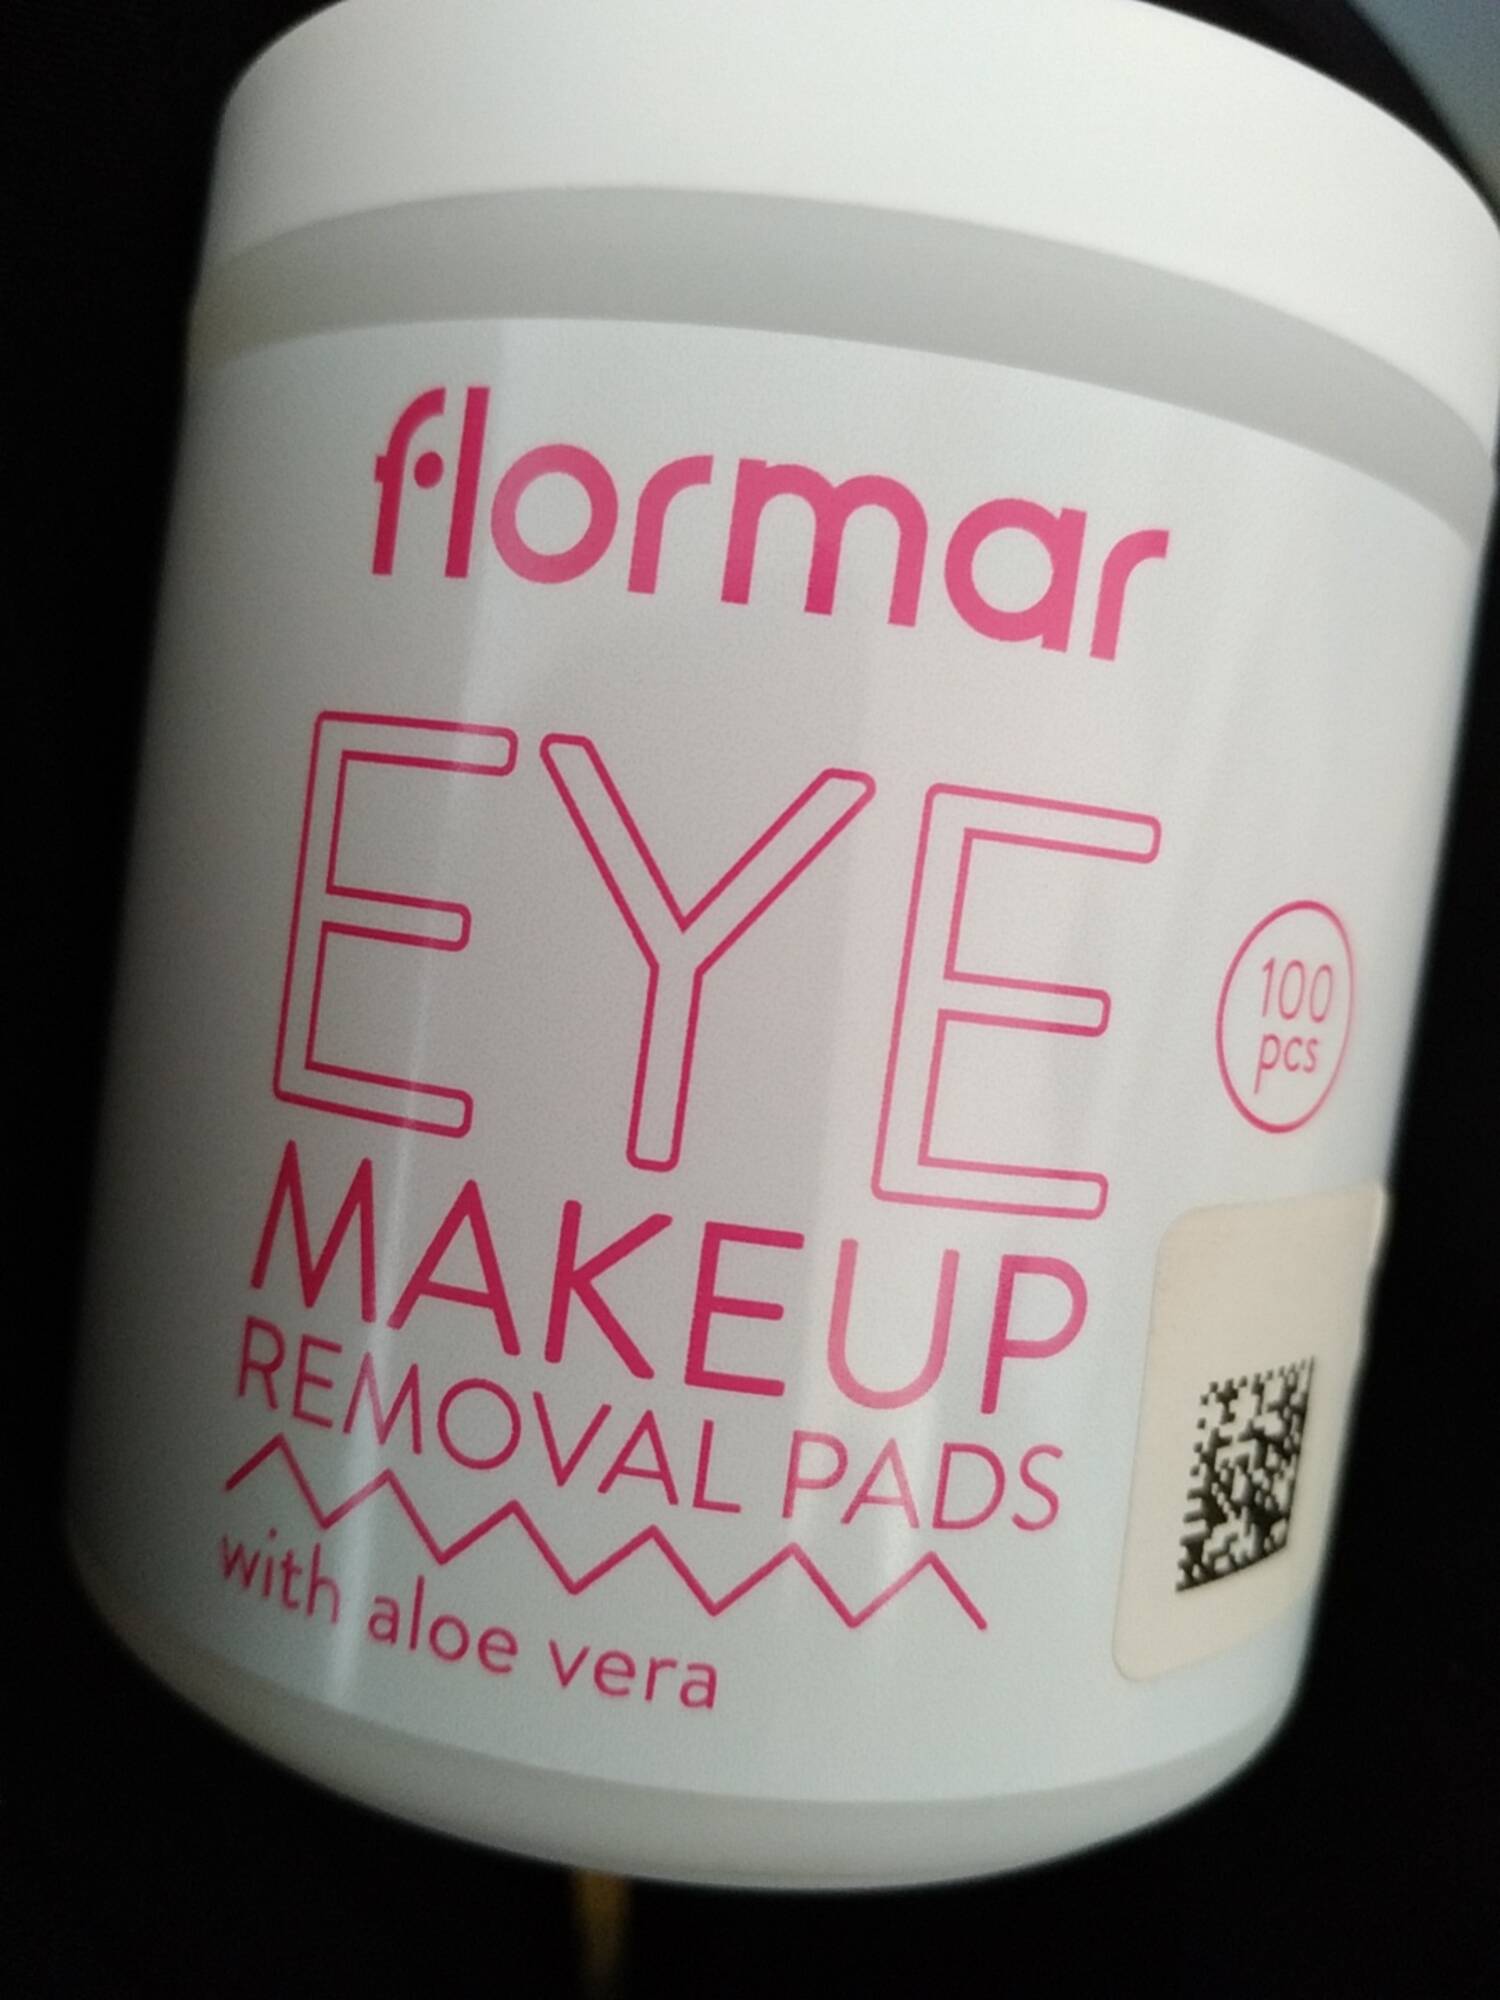 FLORMAR - Eye make up removal pads